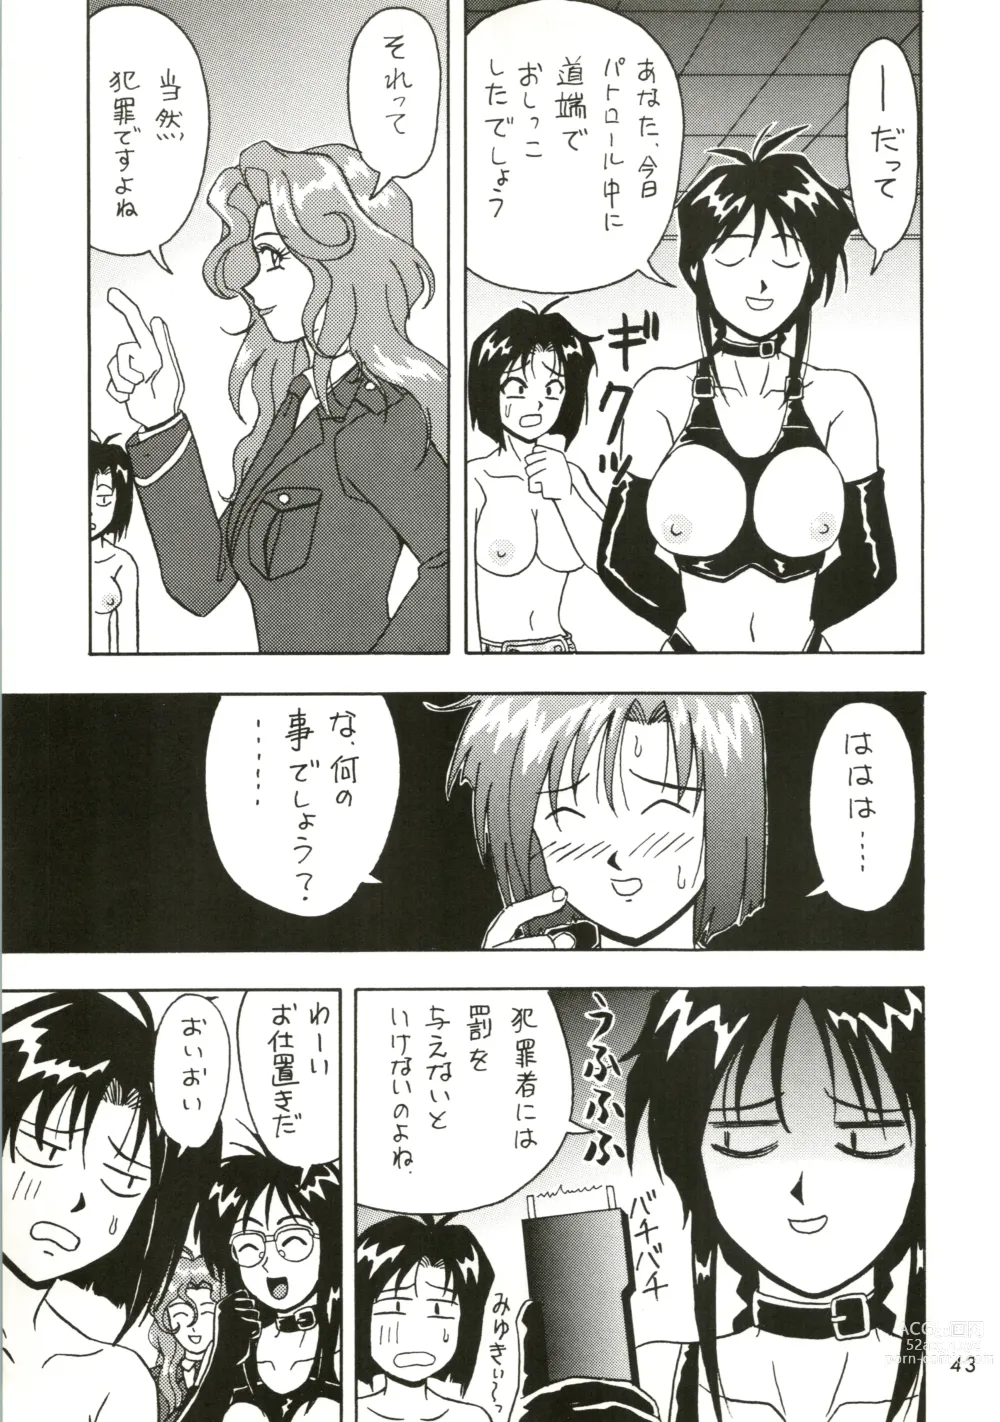 Page 43 of doujinshi FIRE!! CRACKER EX